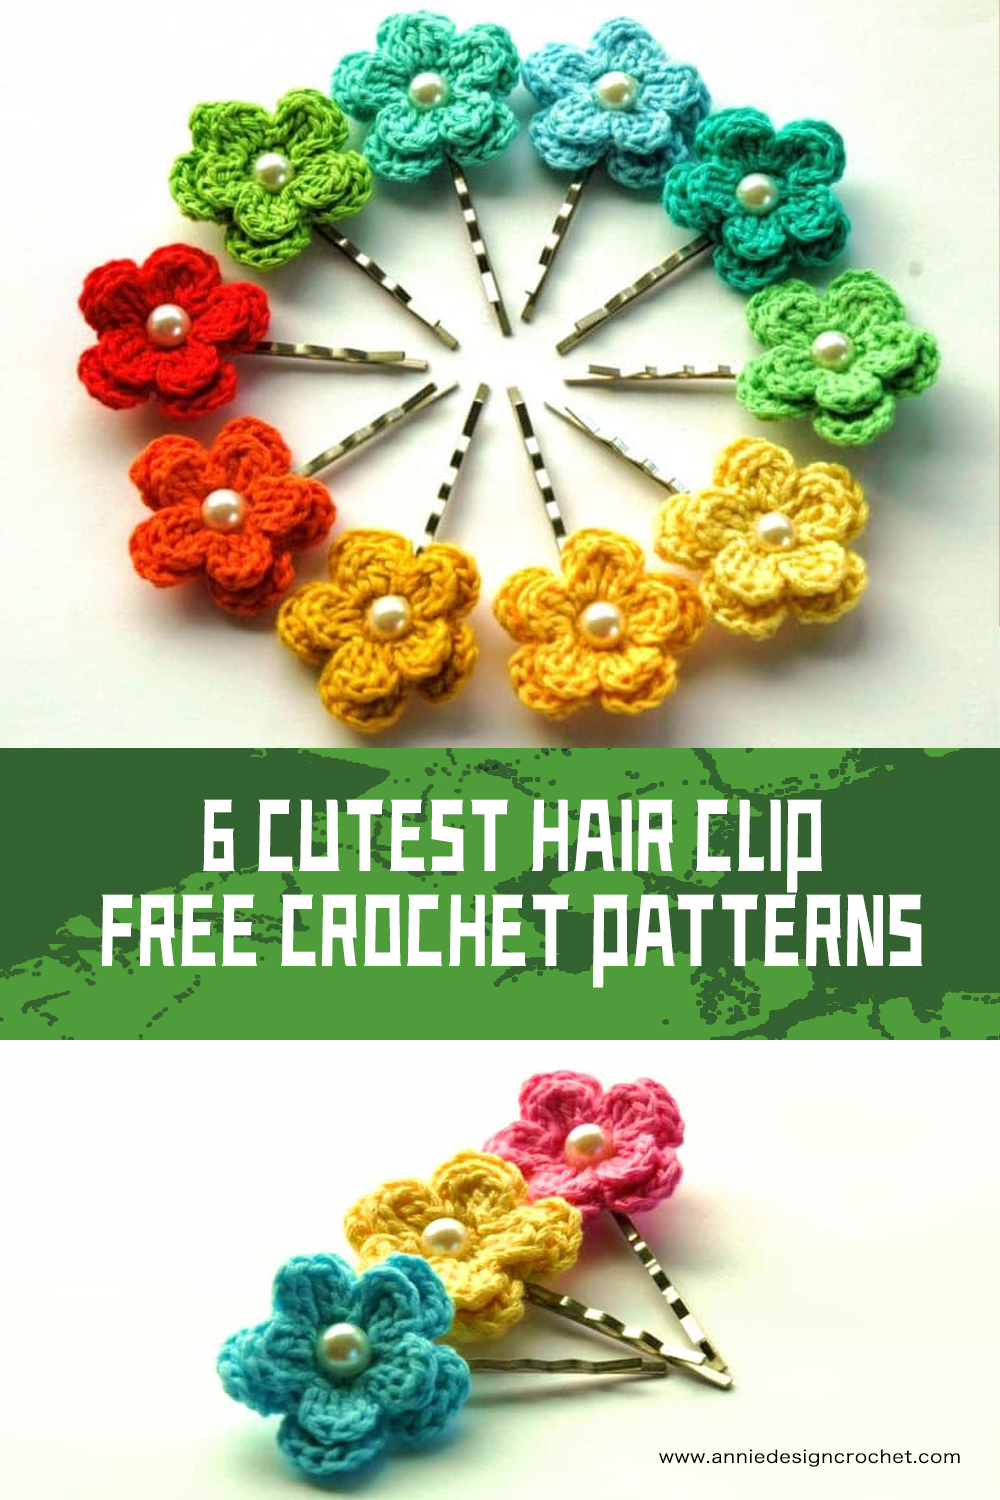 6 Cutest Hair Clip FREE Crochet Patterns